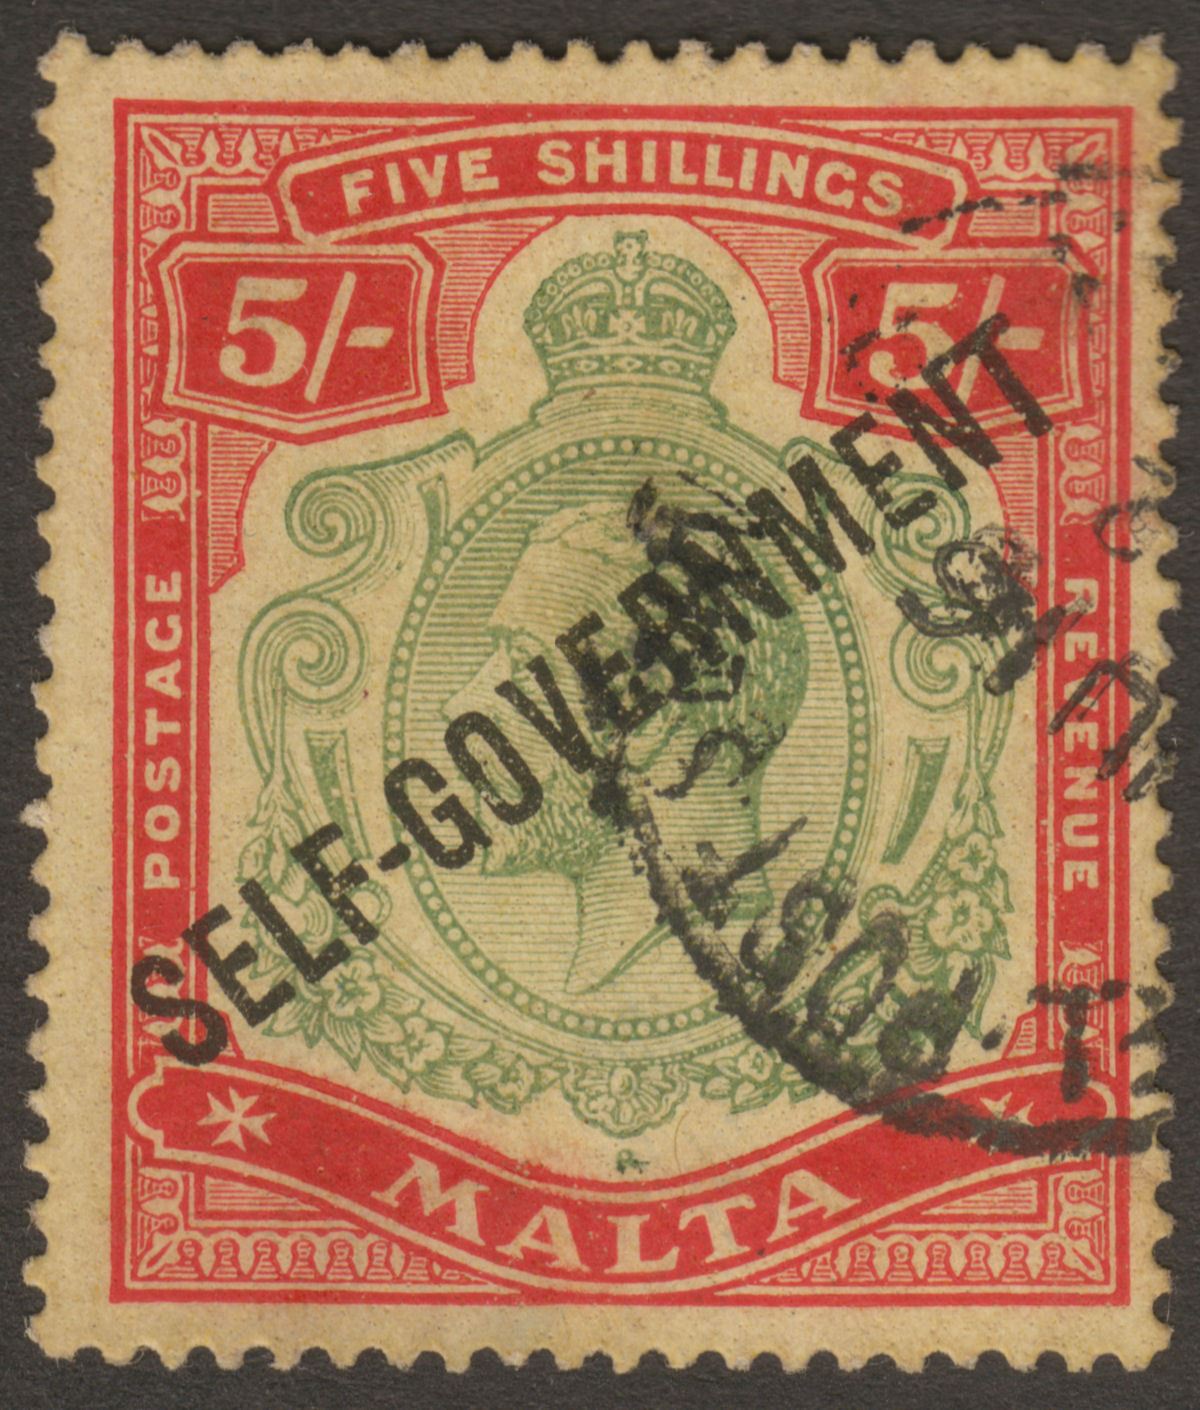 Malta 1922 KGV Self Government 5sh Green + Red Used SG113 cat £100 w pinhole